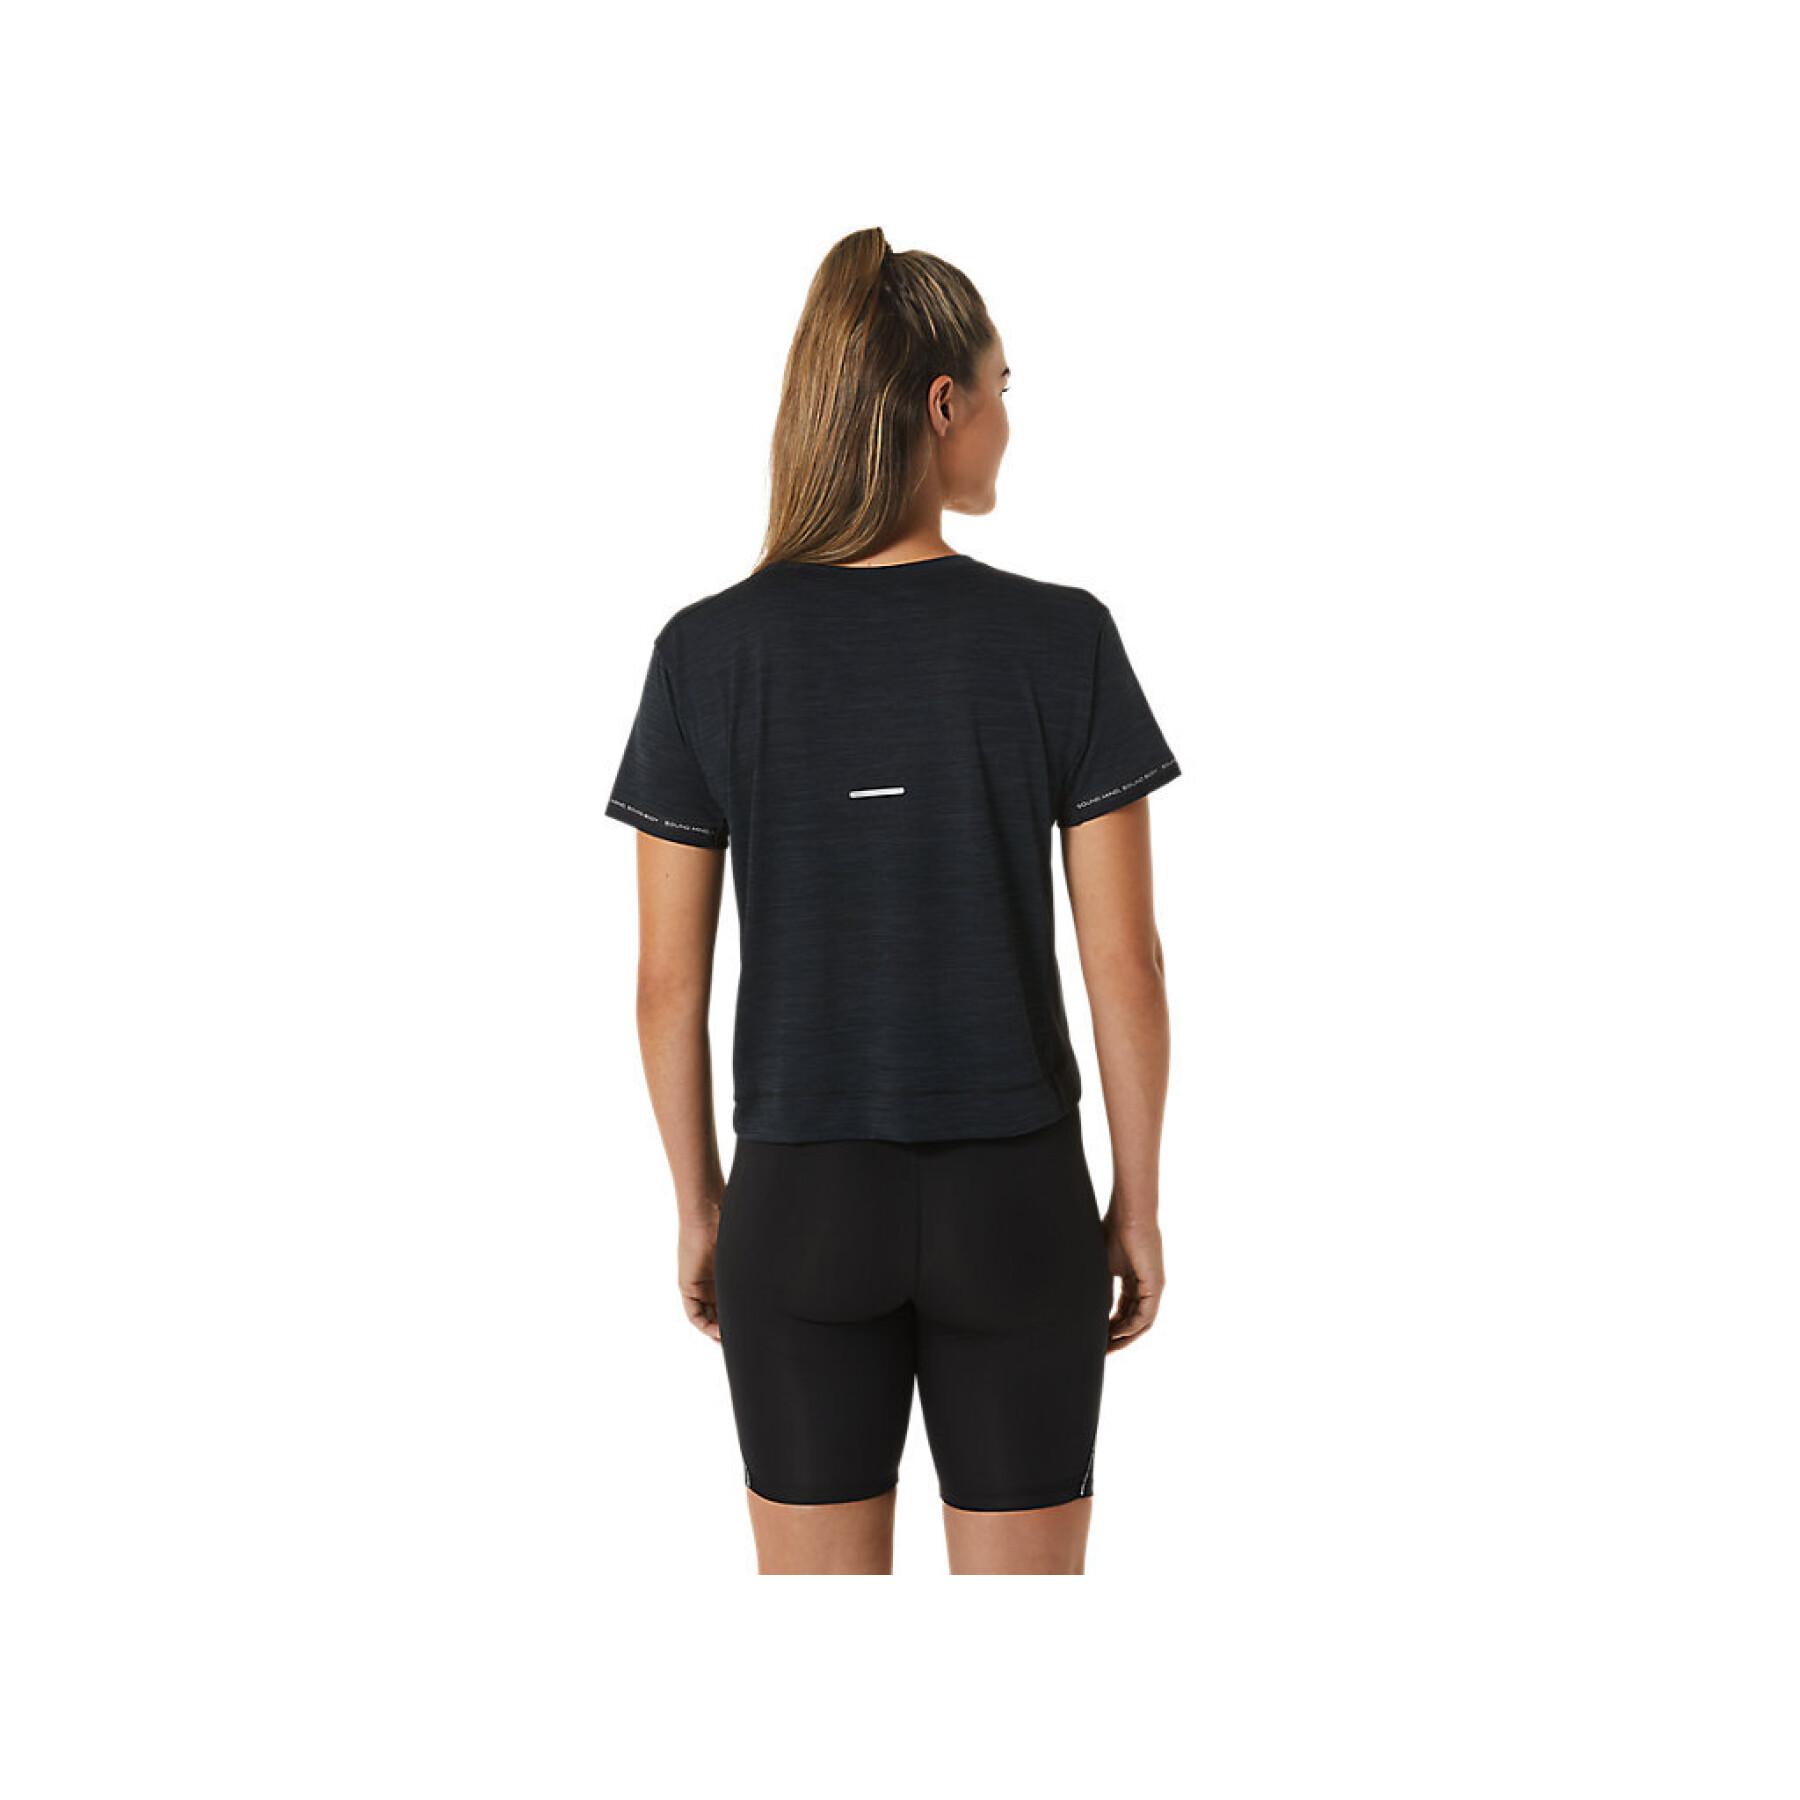 Camiseta crop top de mujer Asics Race